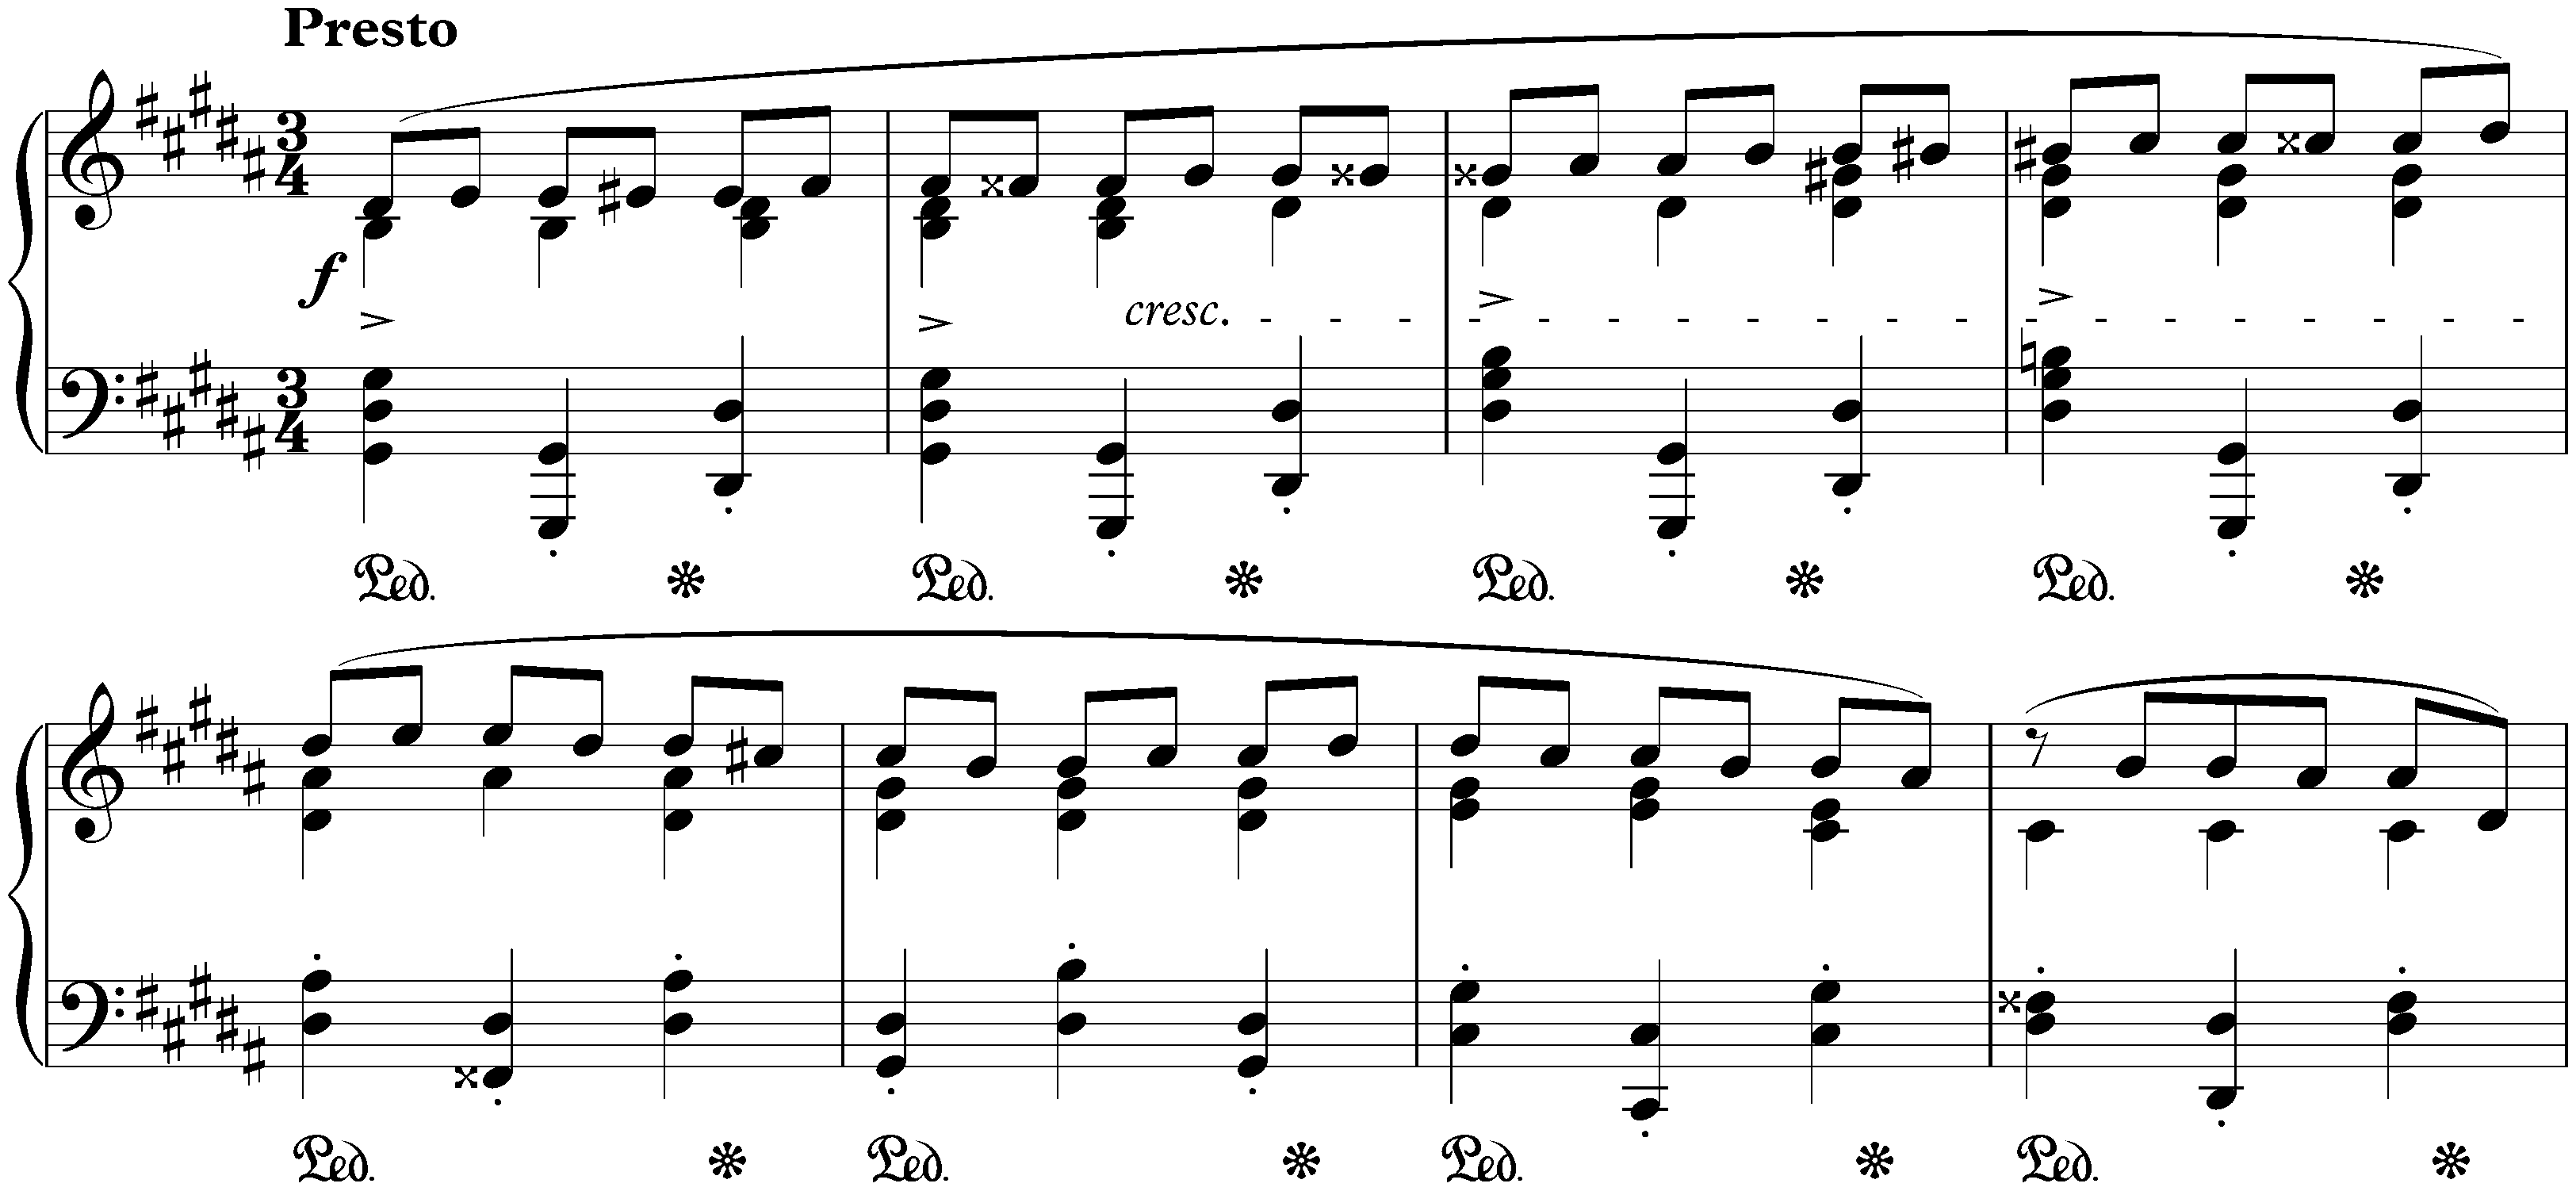 Twenty-four Préludes, op. 28; 12. G-sharp minor